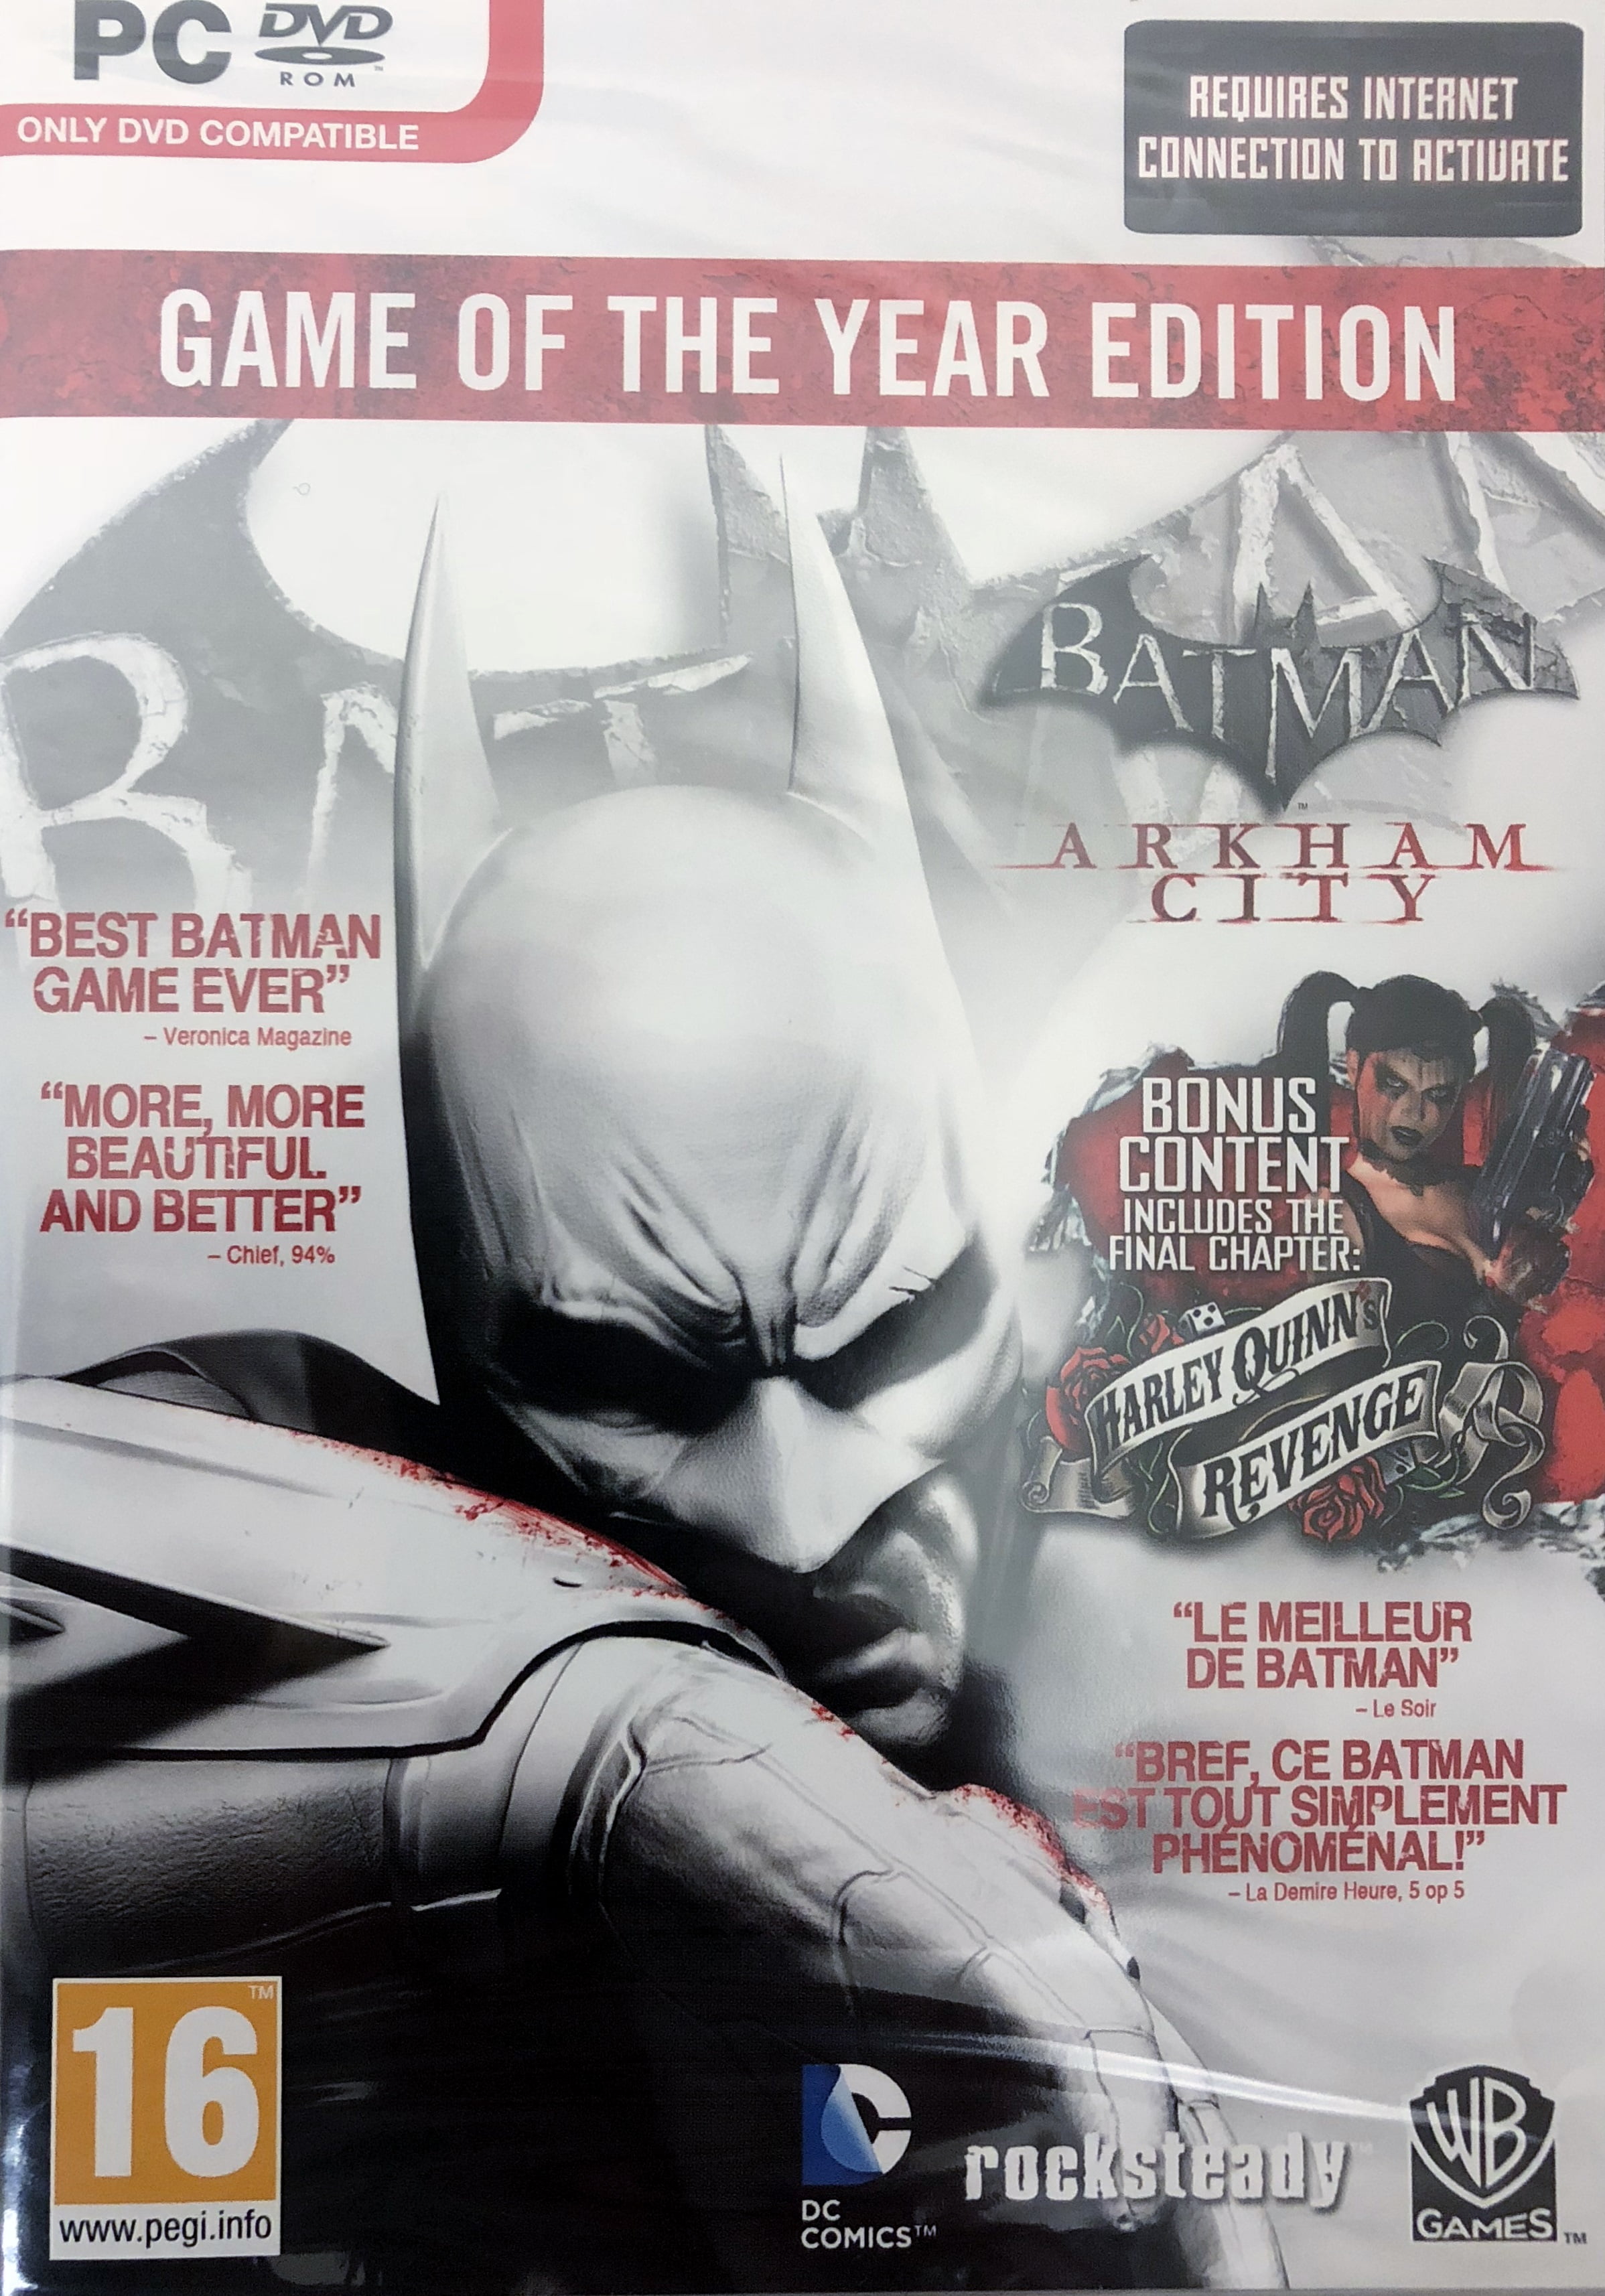 BATMAN ARKHAM ASYLUM GAME OF THE YEAR EDITION PC DVD ROM